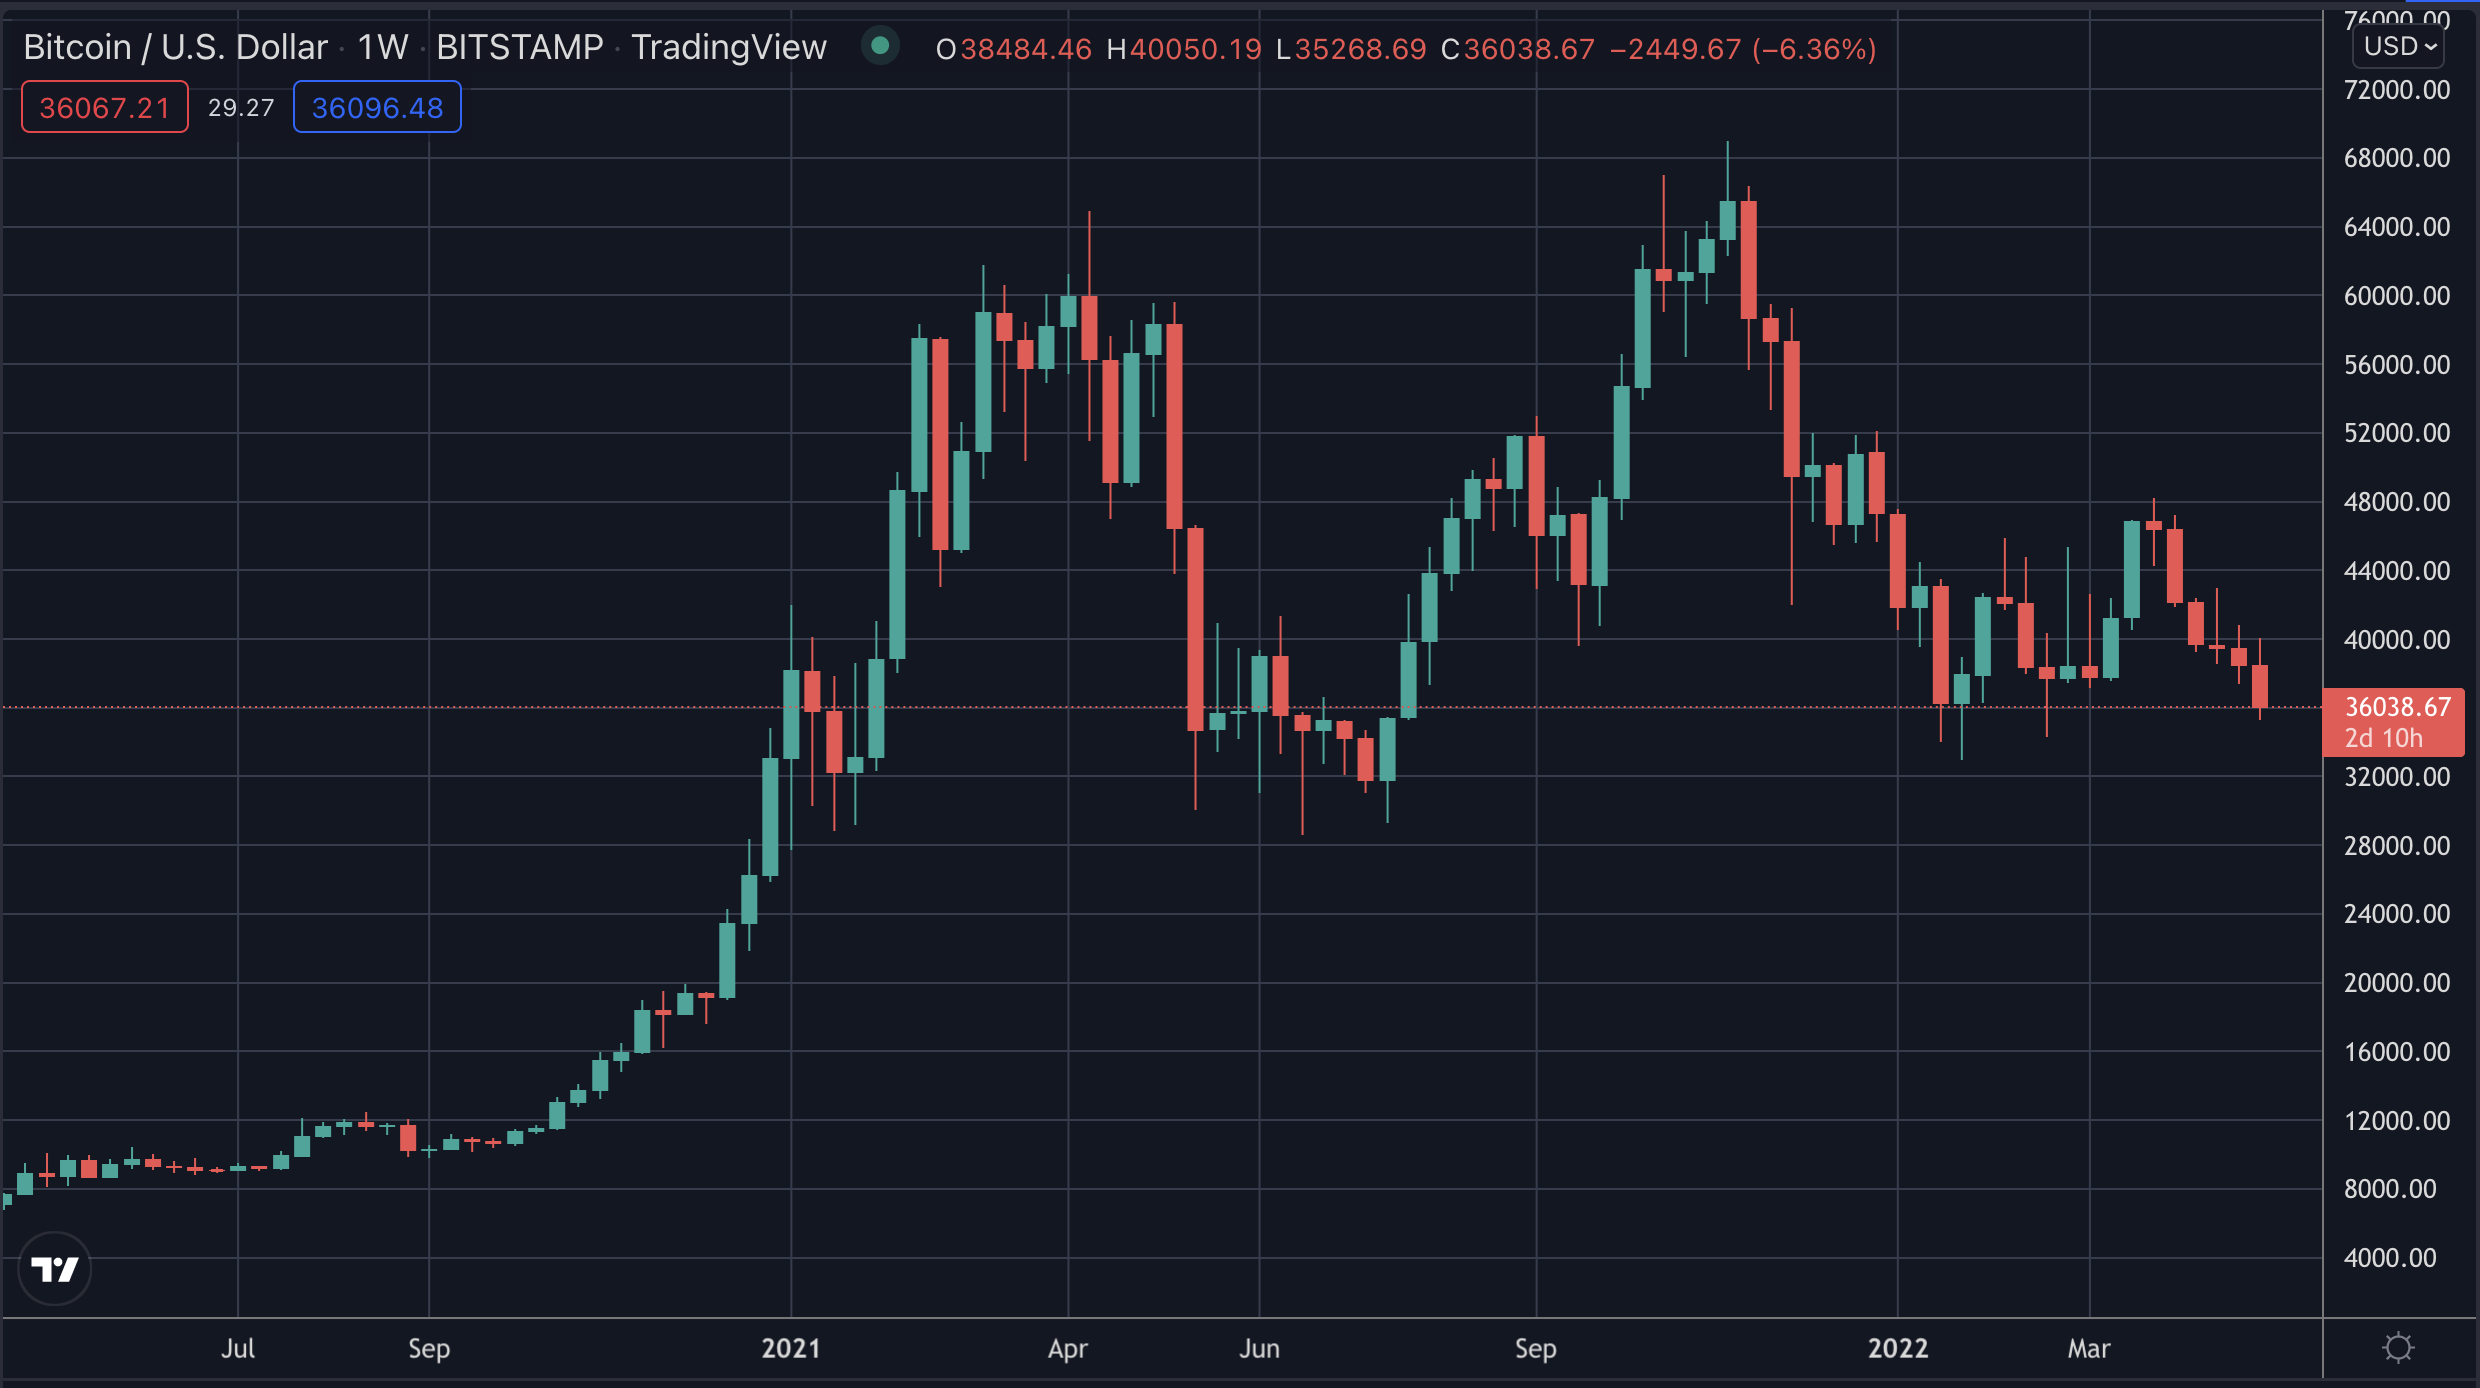 Bitcoin's price, May 2022